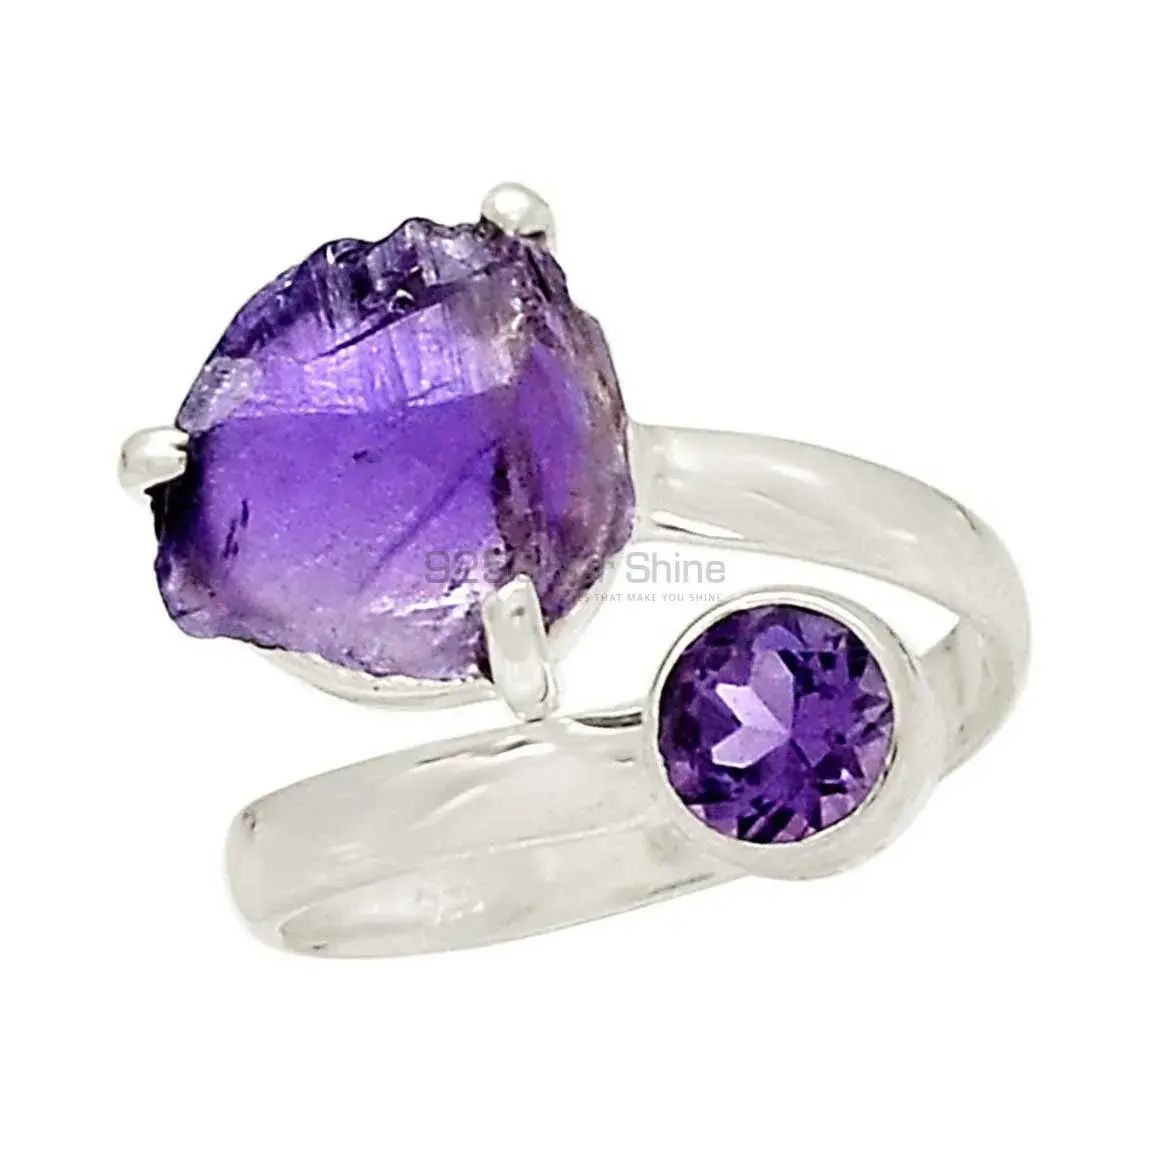 Stunning Amethyst Gemstone Ring In Sterling Silver Jewelry 925SR2377_0